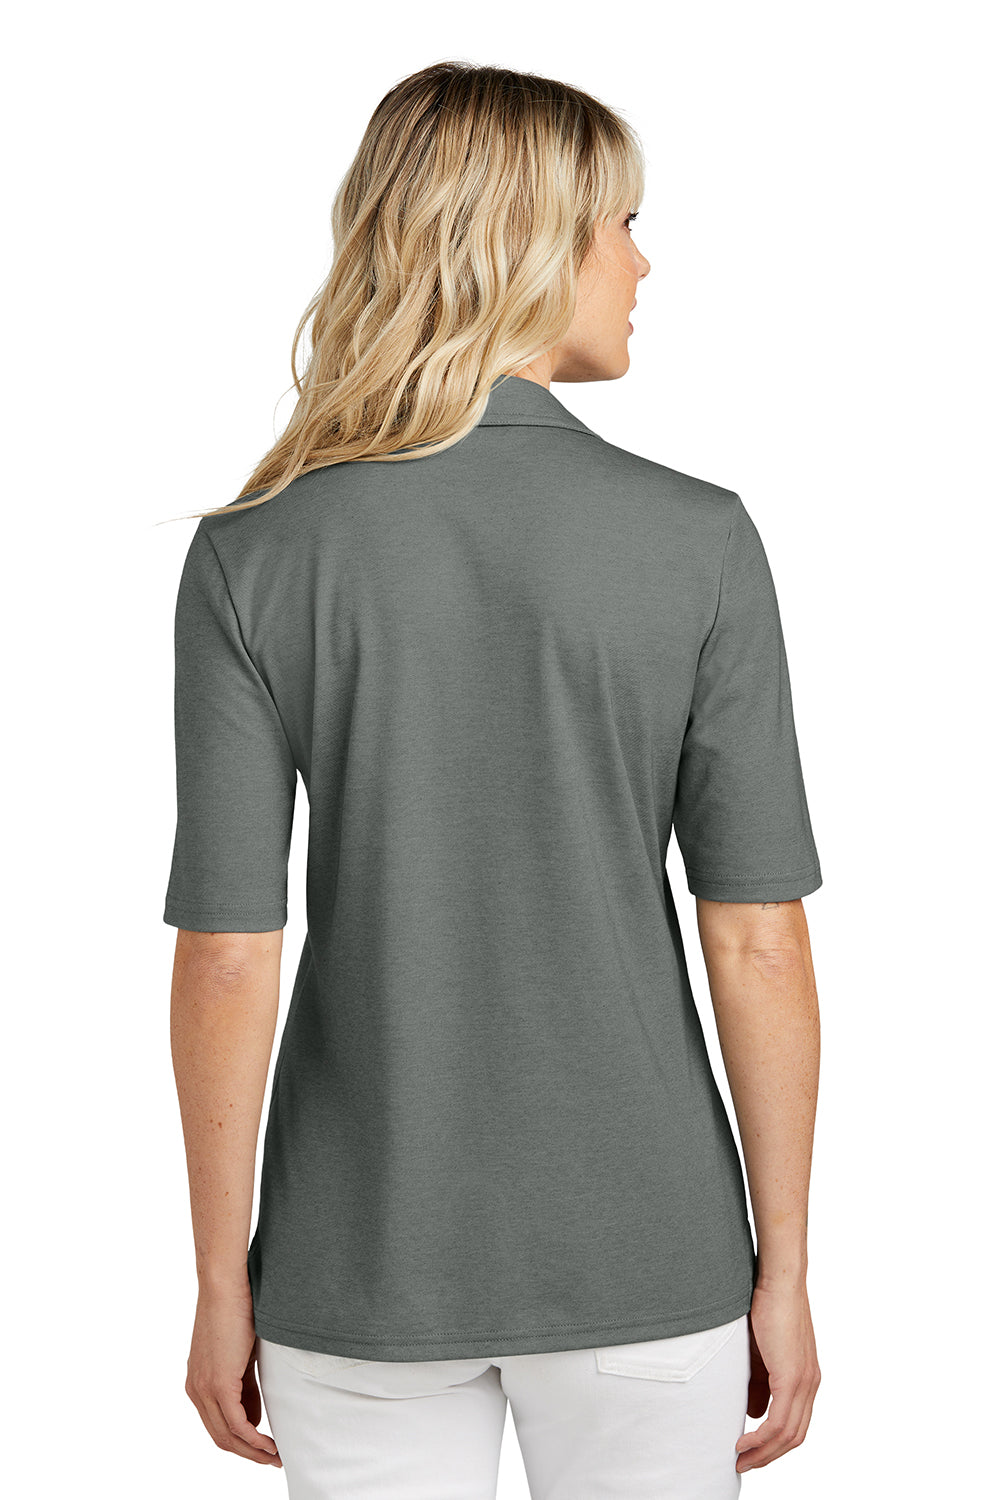 TravisMathew TM1LD004 Womens Sunsetters Wrinkle Resistant Short Sleeve Polo Shirt Heather Black Model Back